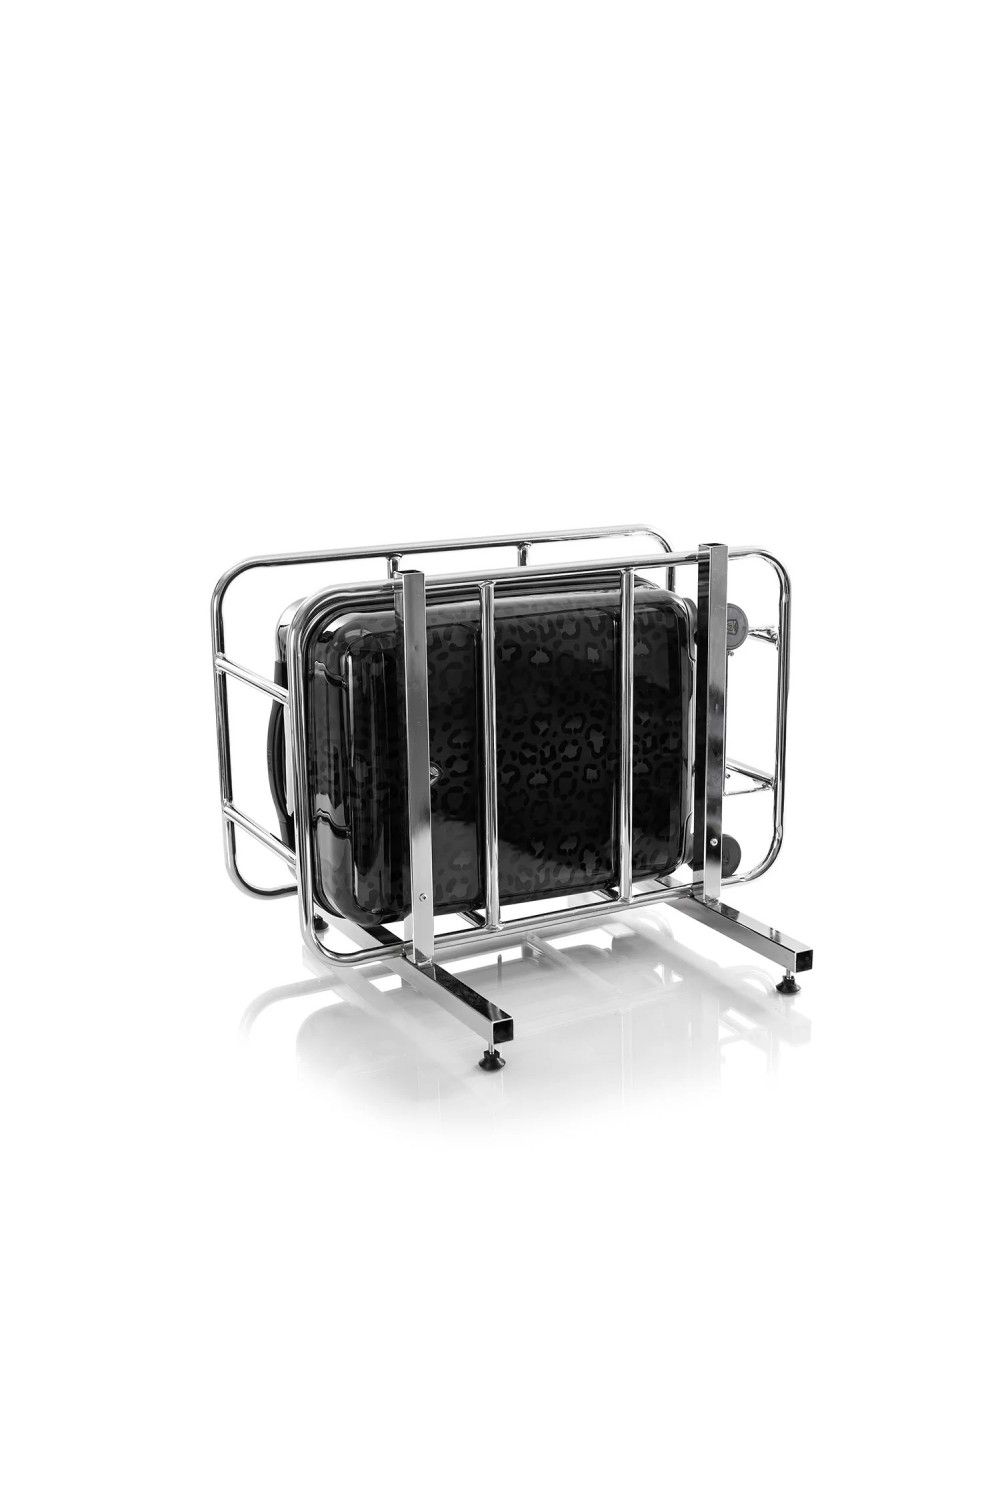 Suitcase hand luggage Heys Black Leopard 4 wheel 55cm expandable